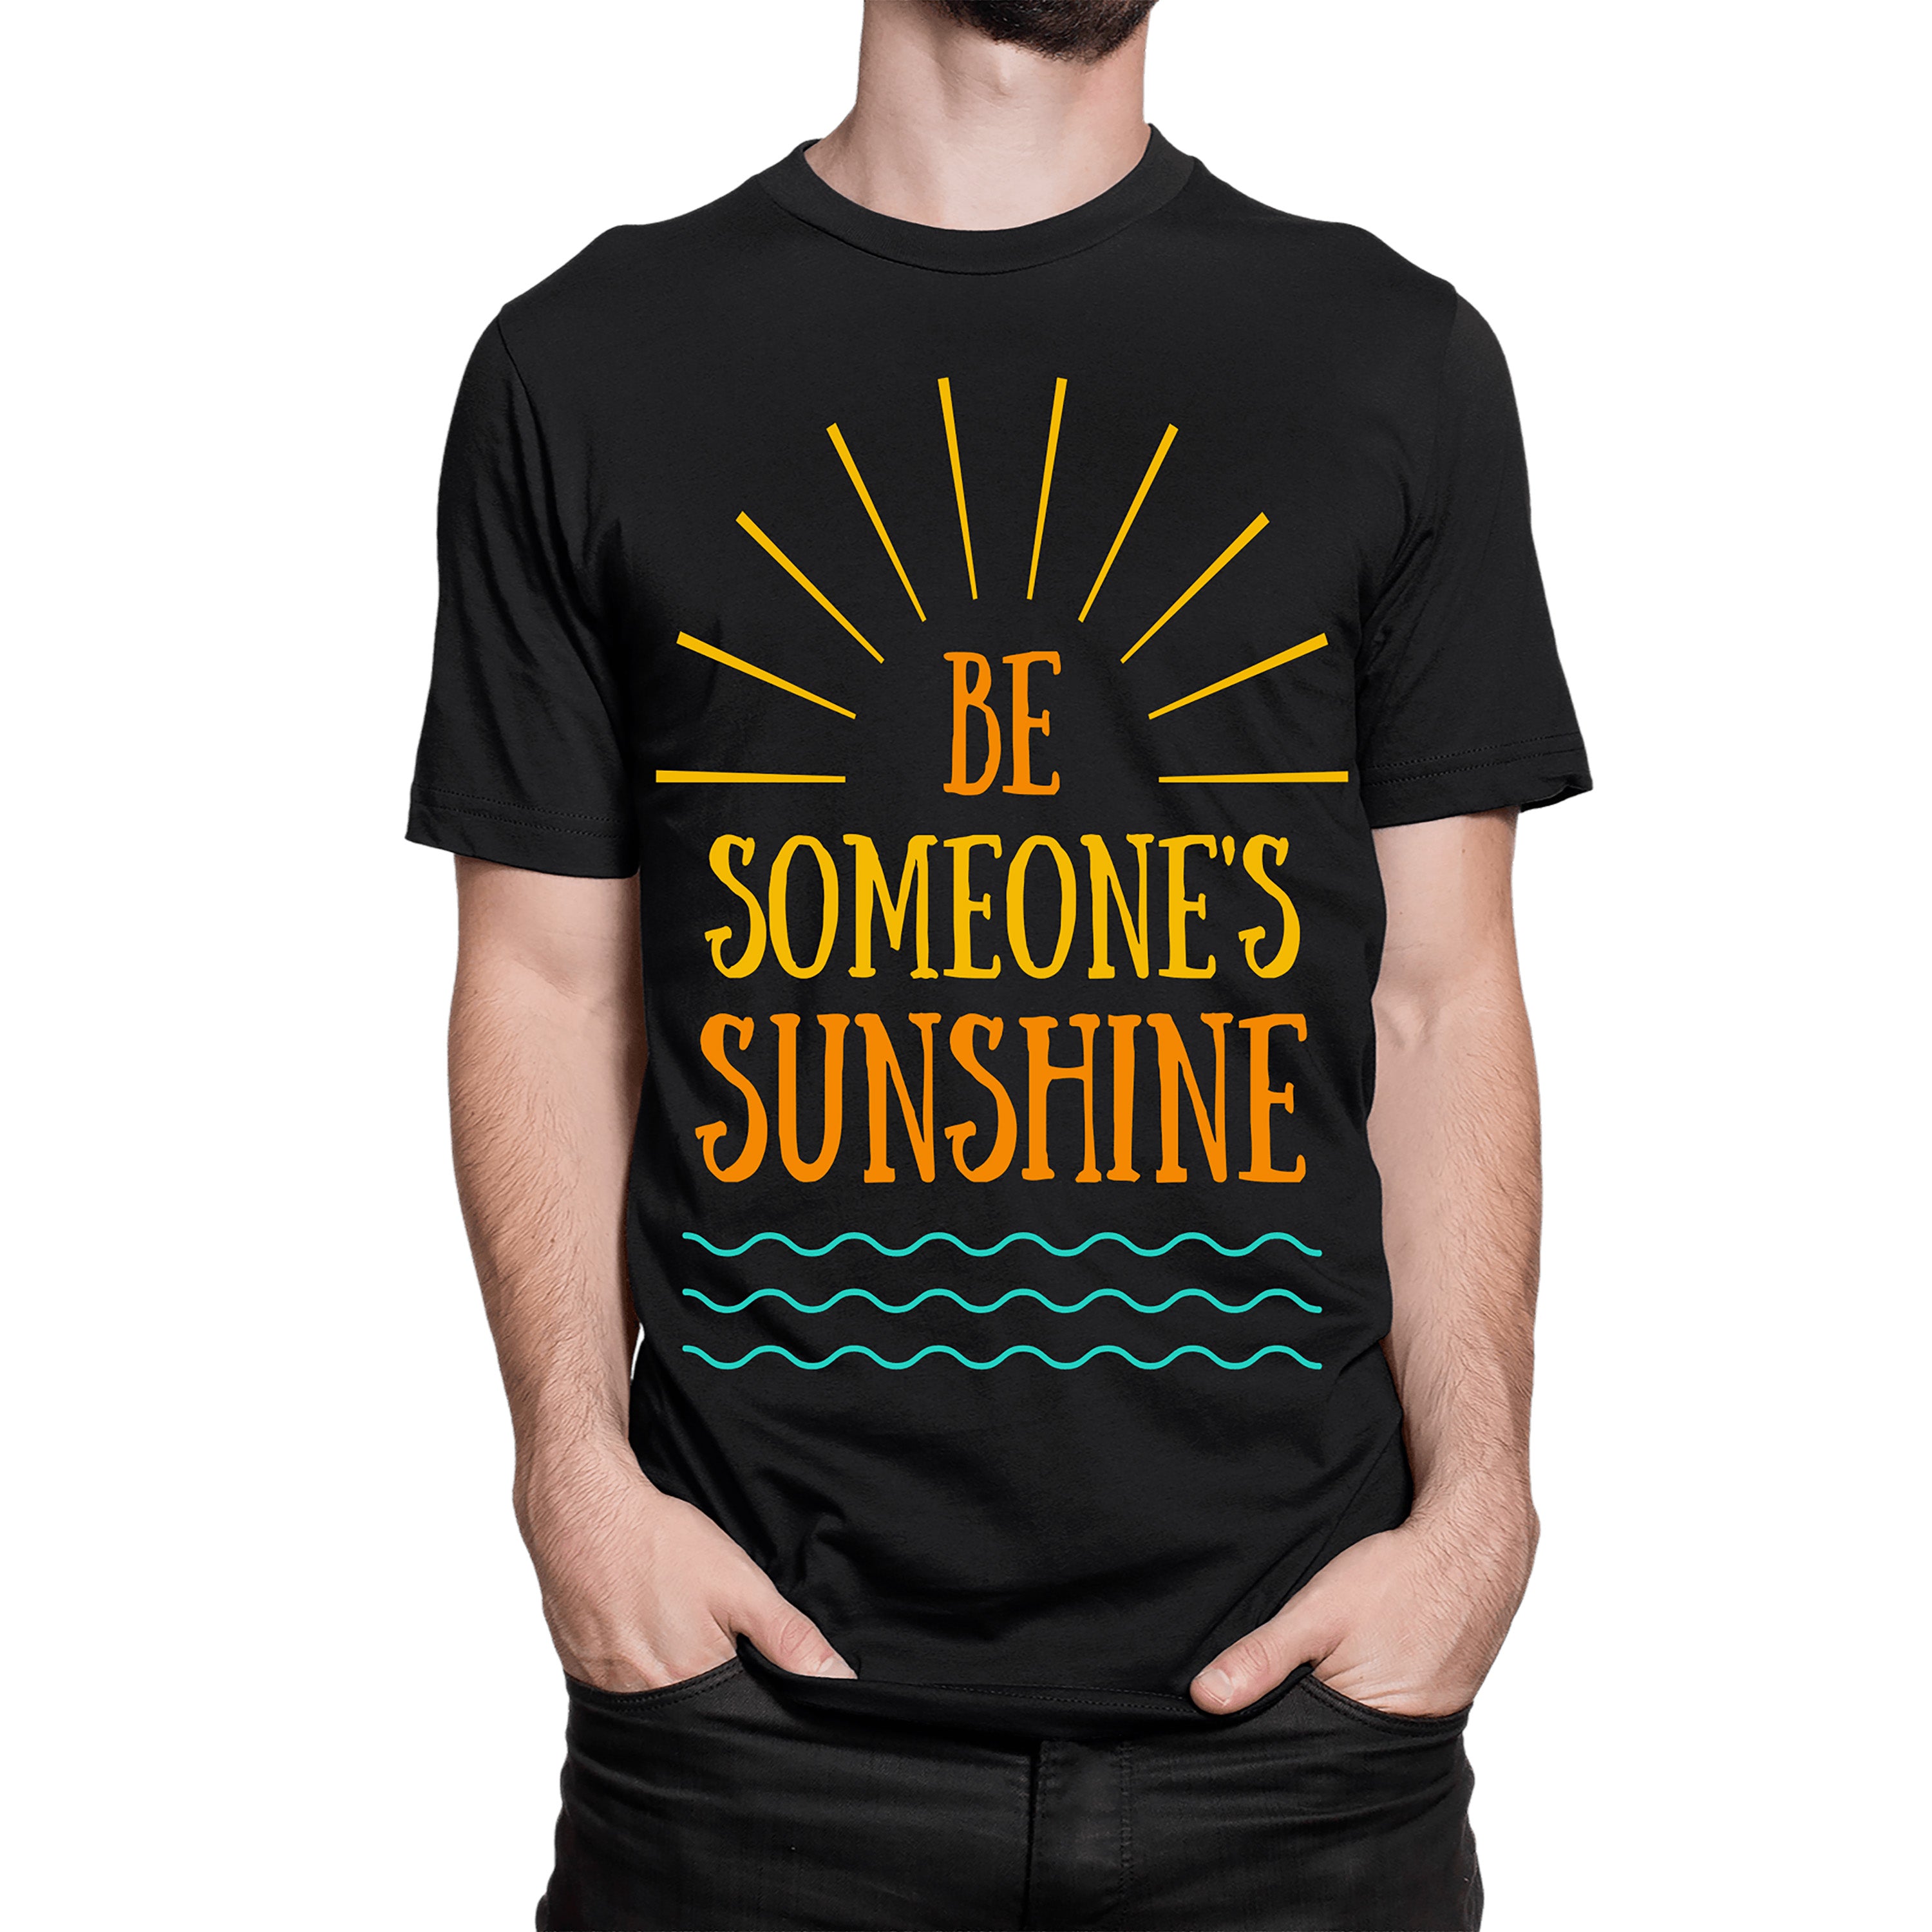 "BE SOMEONE'S SUNSHINE" MEN